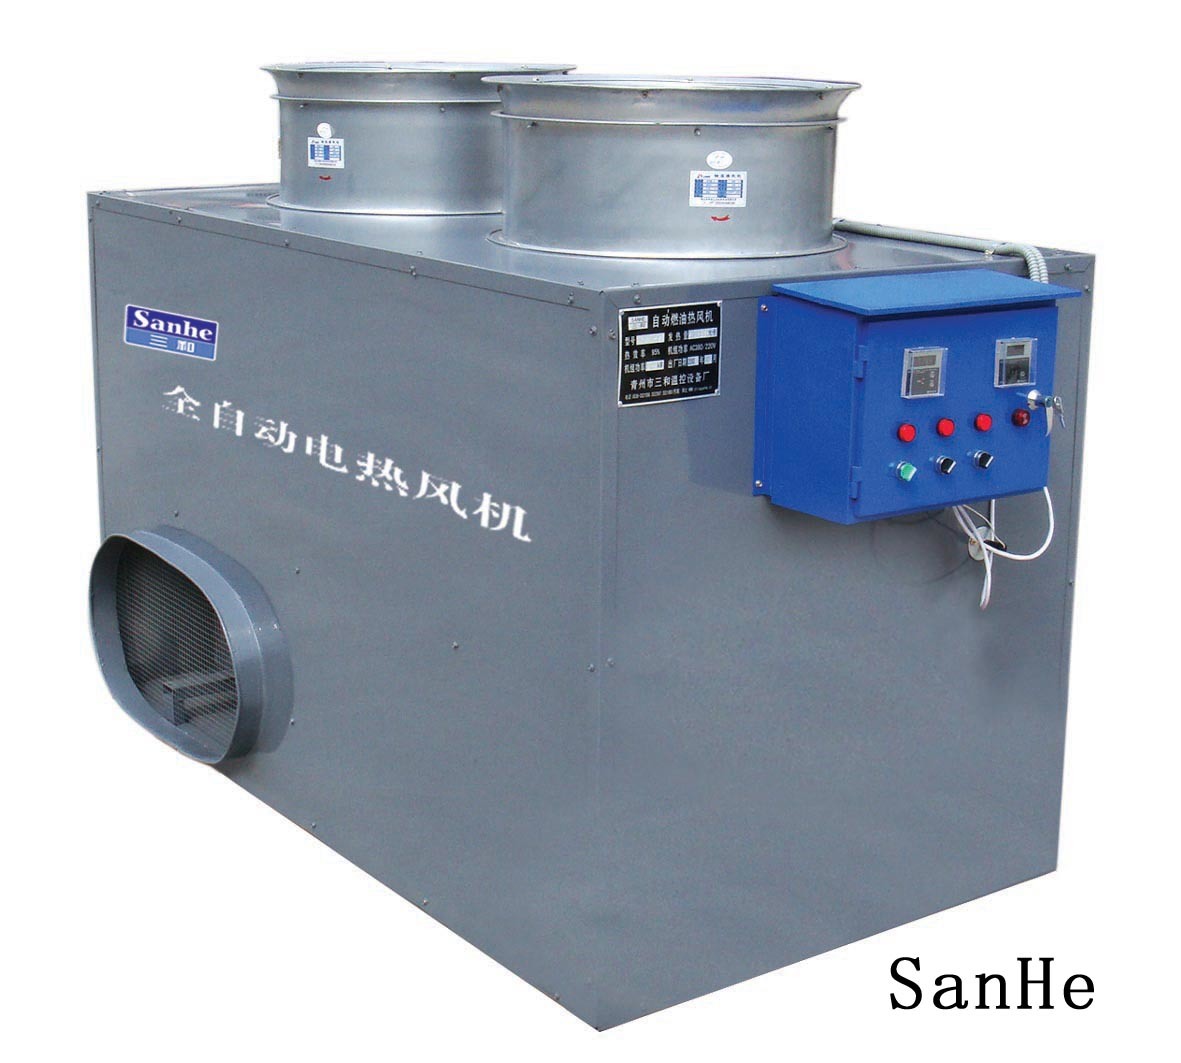 Sanhe Electrical Heater (FSH)